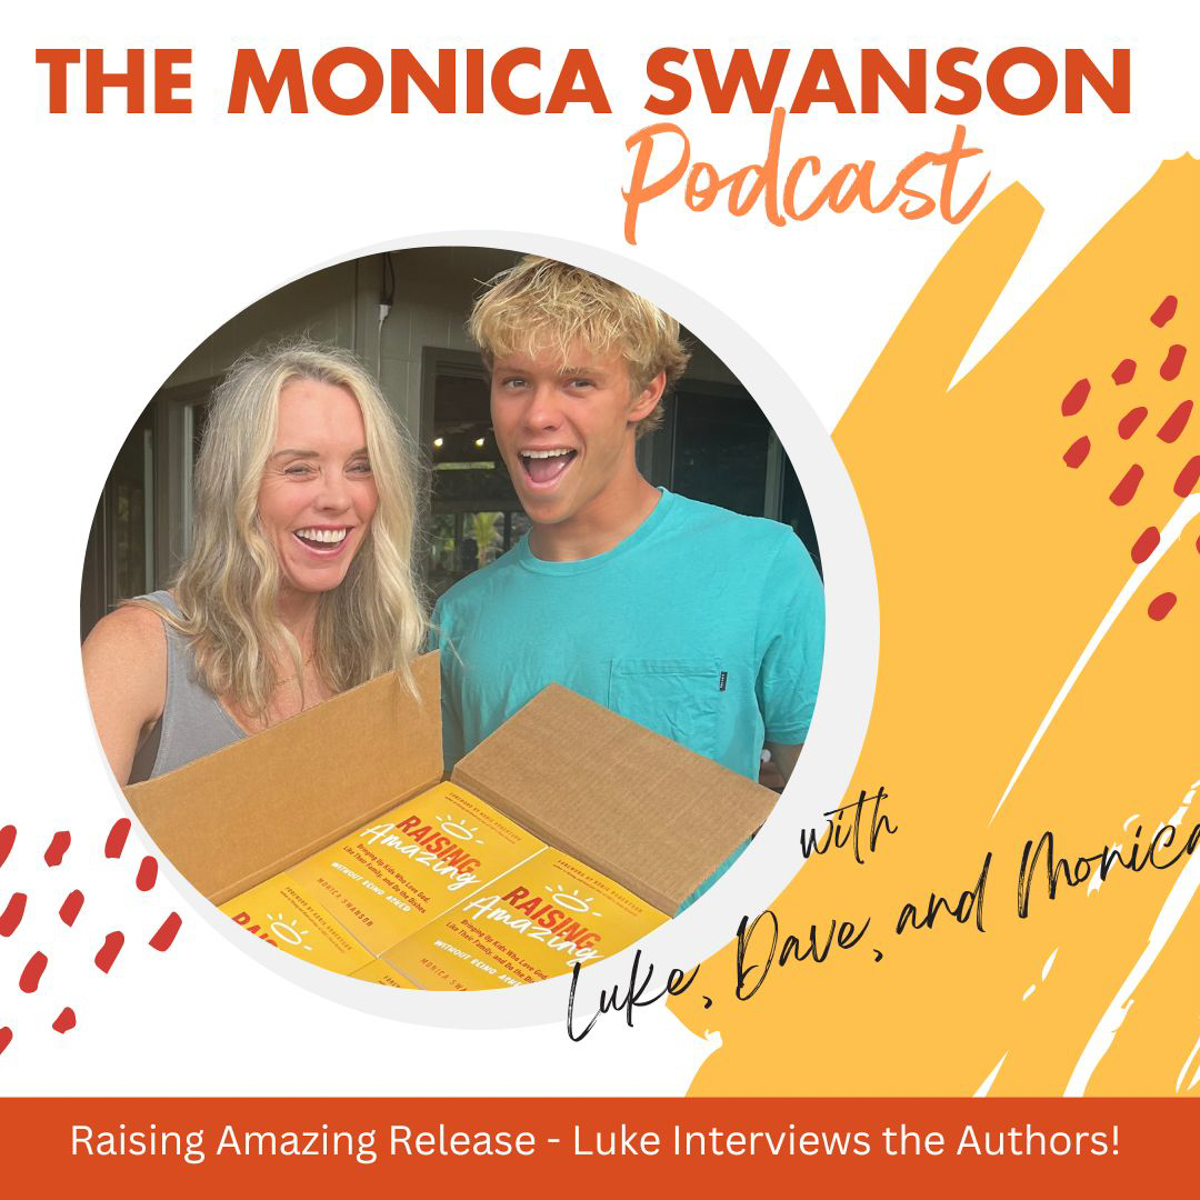 Raising Amazing Release Week: Luke Interviews the Authors!